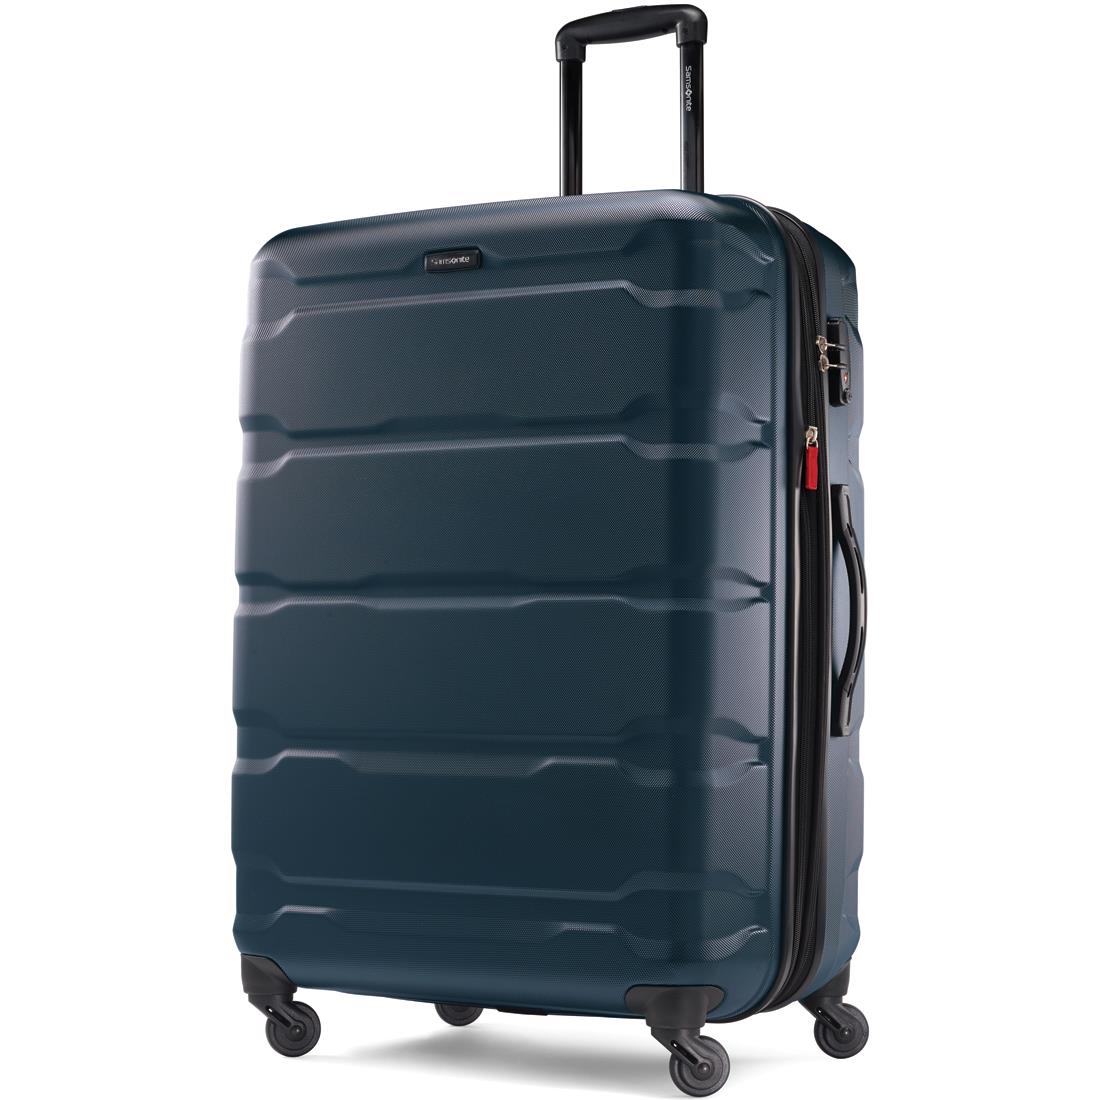 Samsonite Omni Hardside Spinner Suitcase Luggage Teal - 20 / 24 / 28 28 inch (68310-2824)